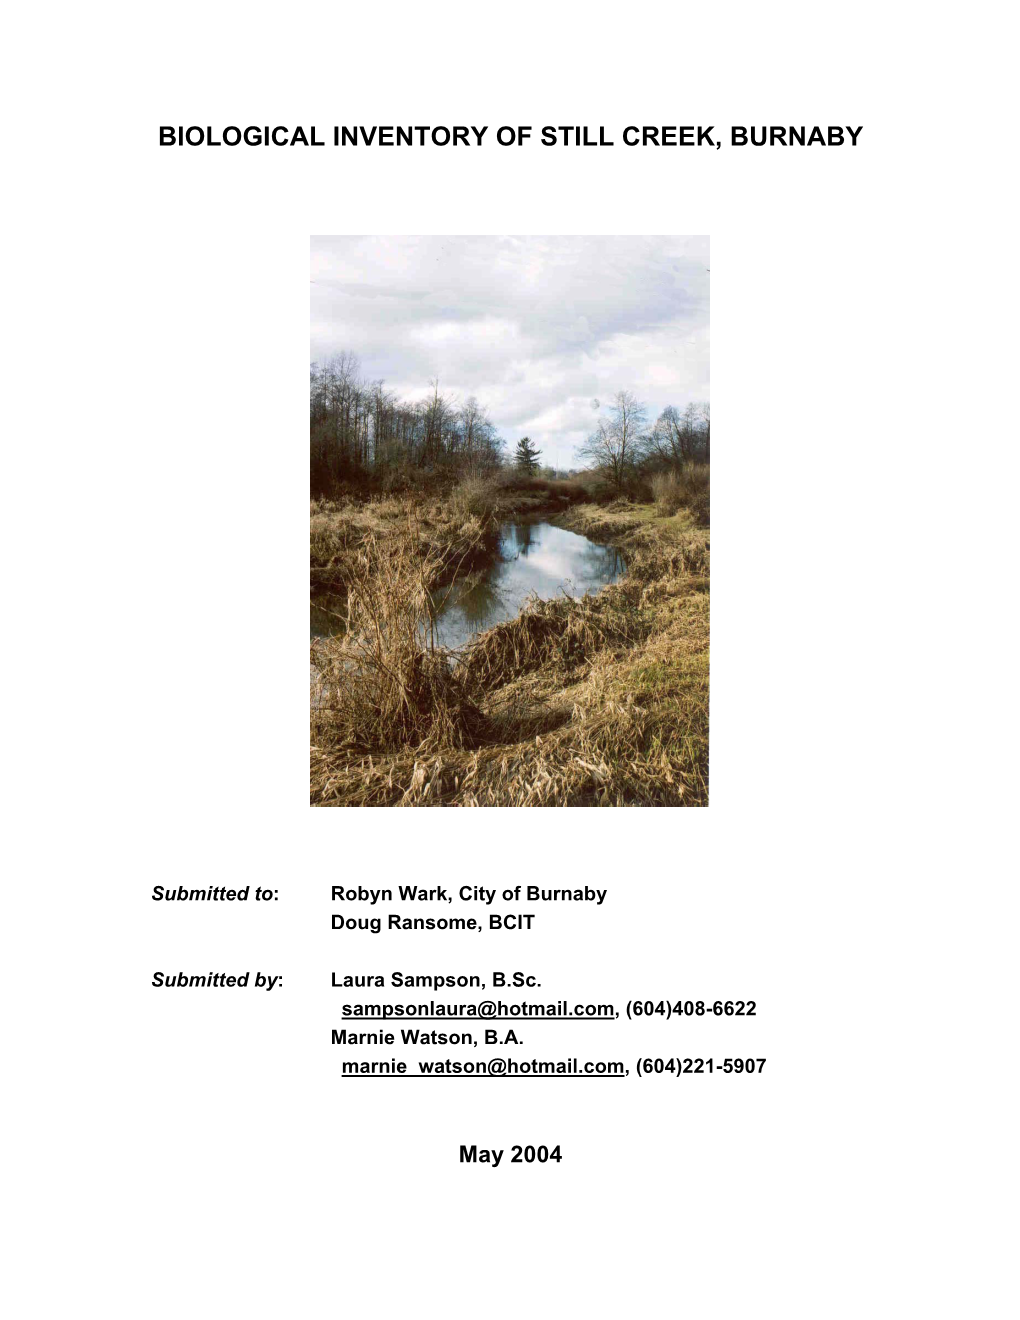 Biological Inventory of Still Creek, Burnaby